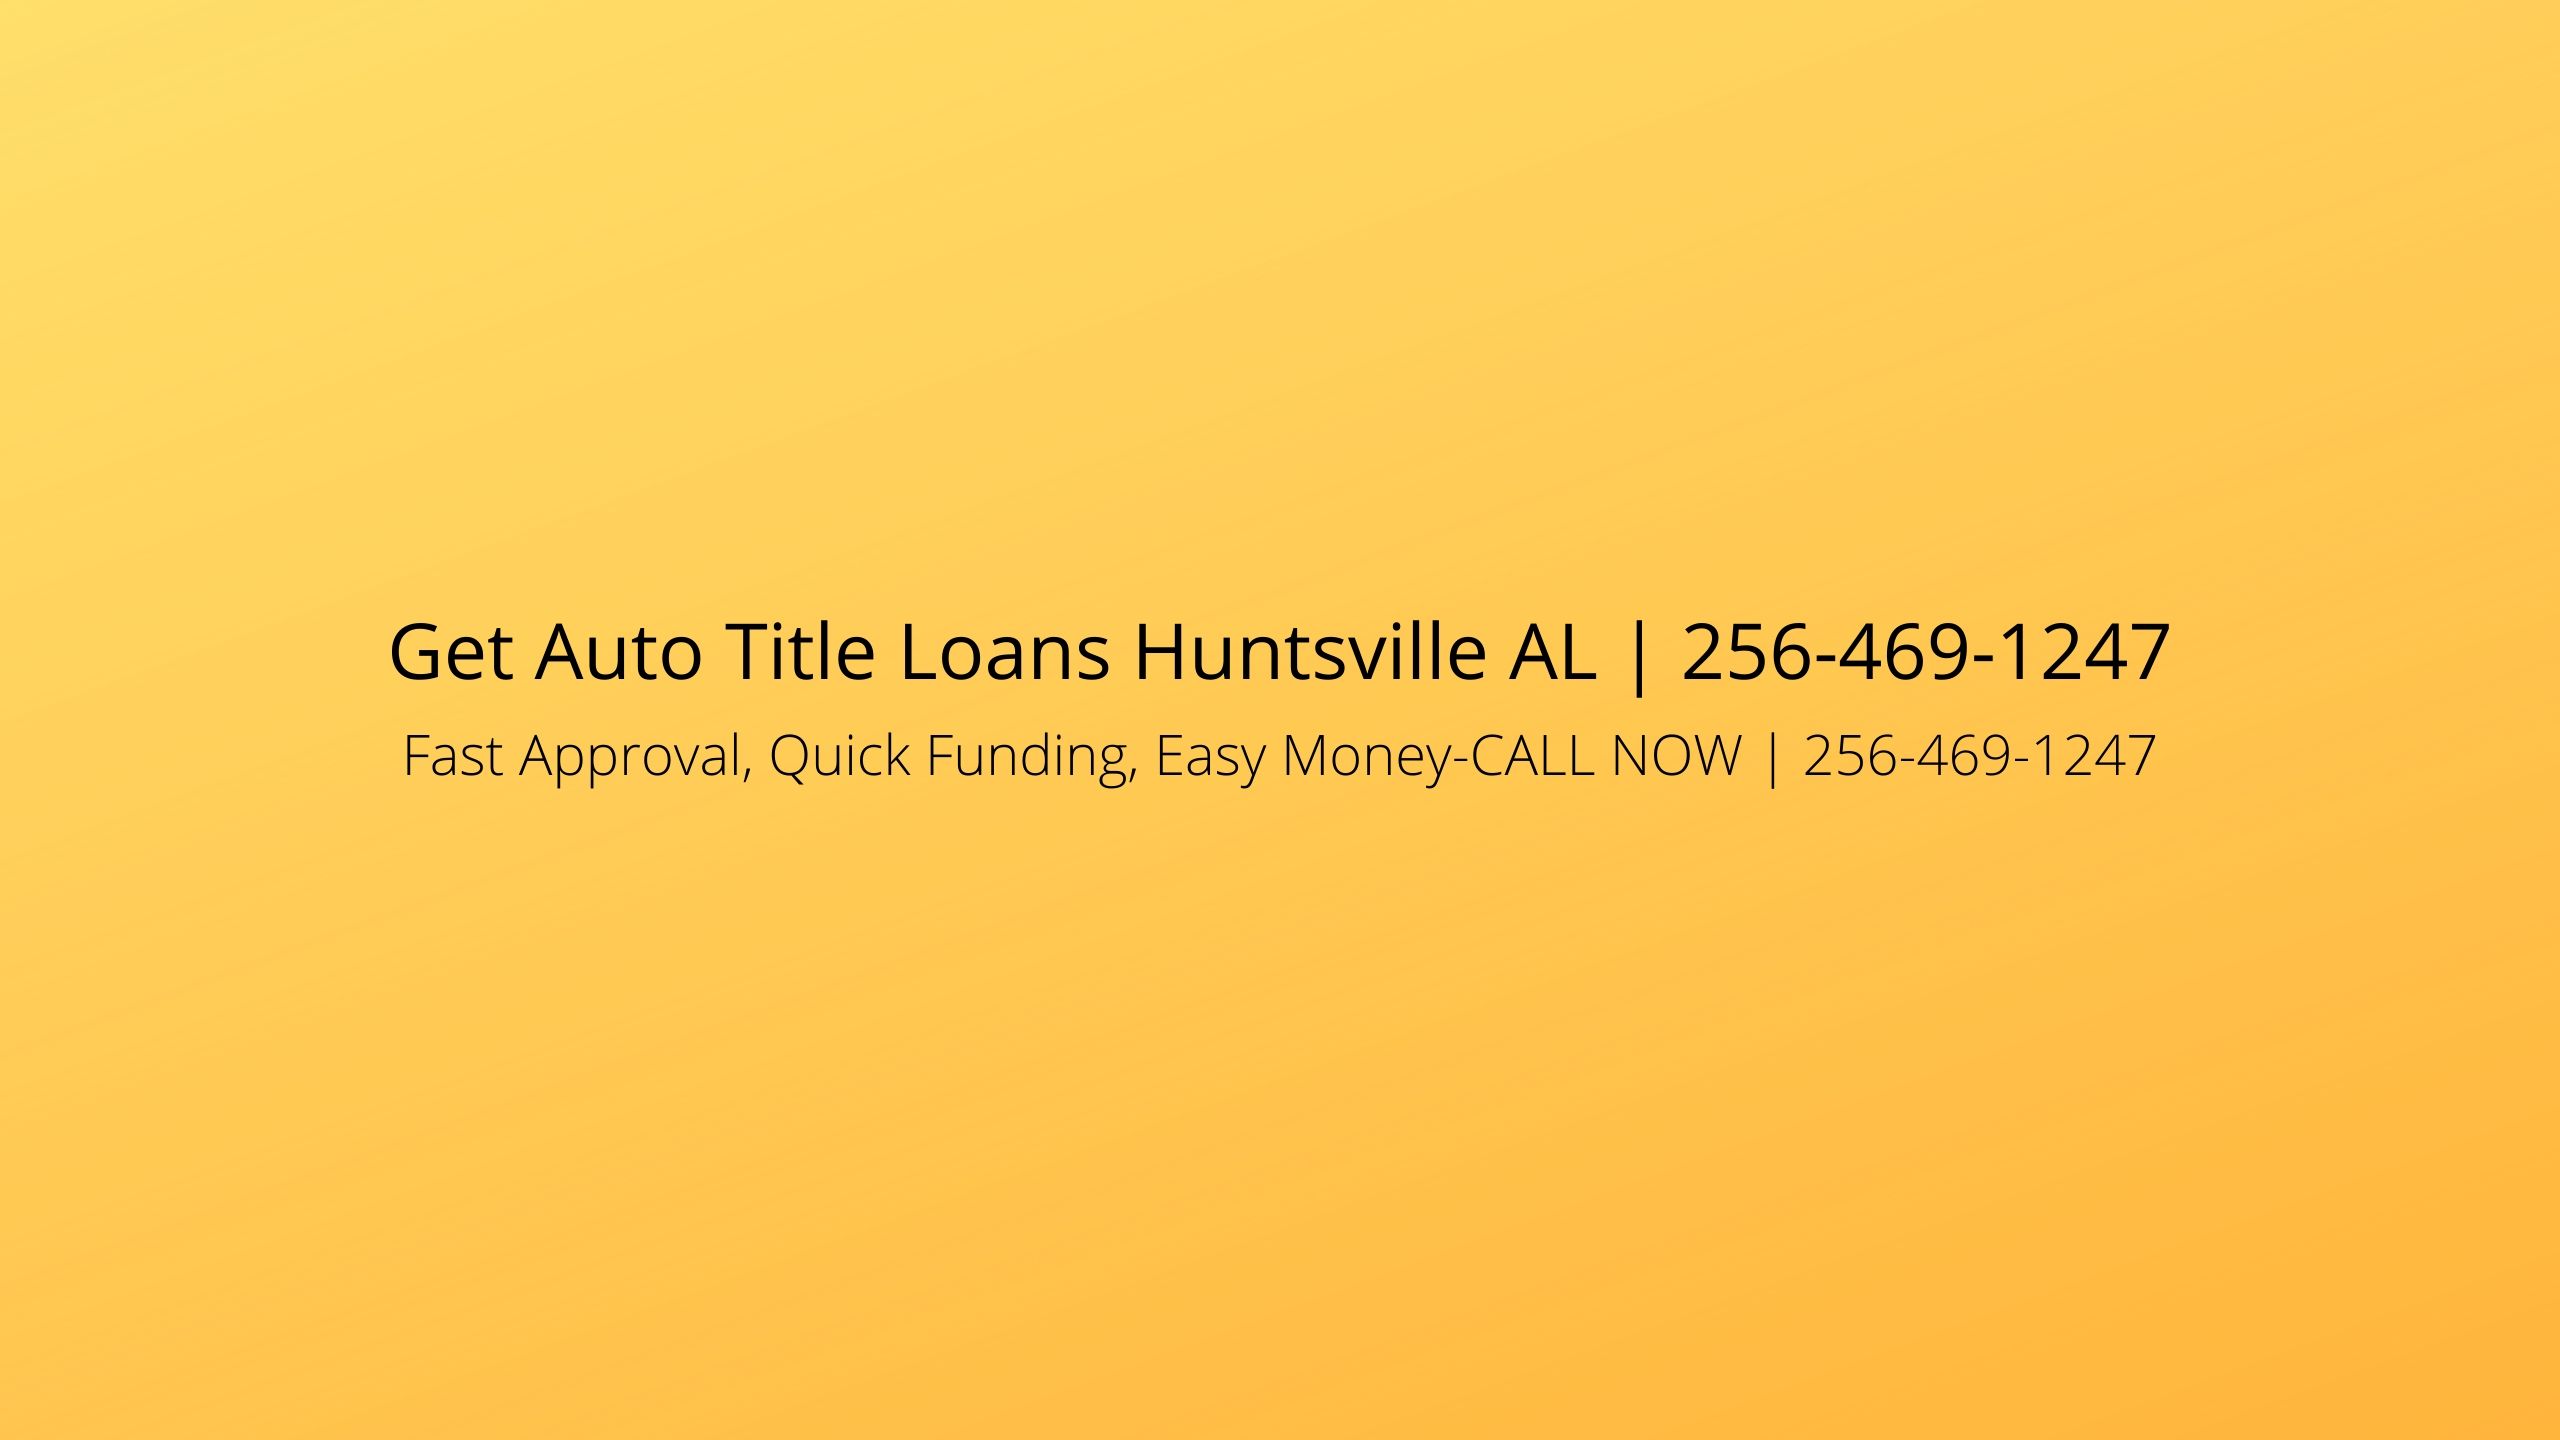 Get Auto Title Loans Huntsville AL